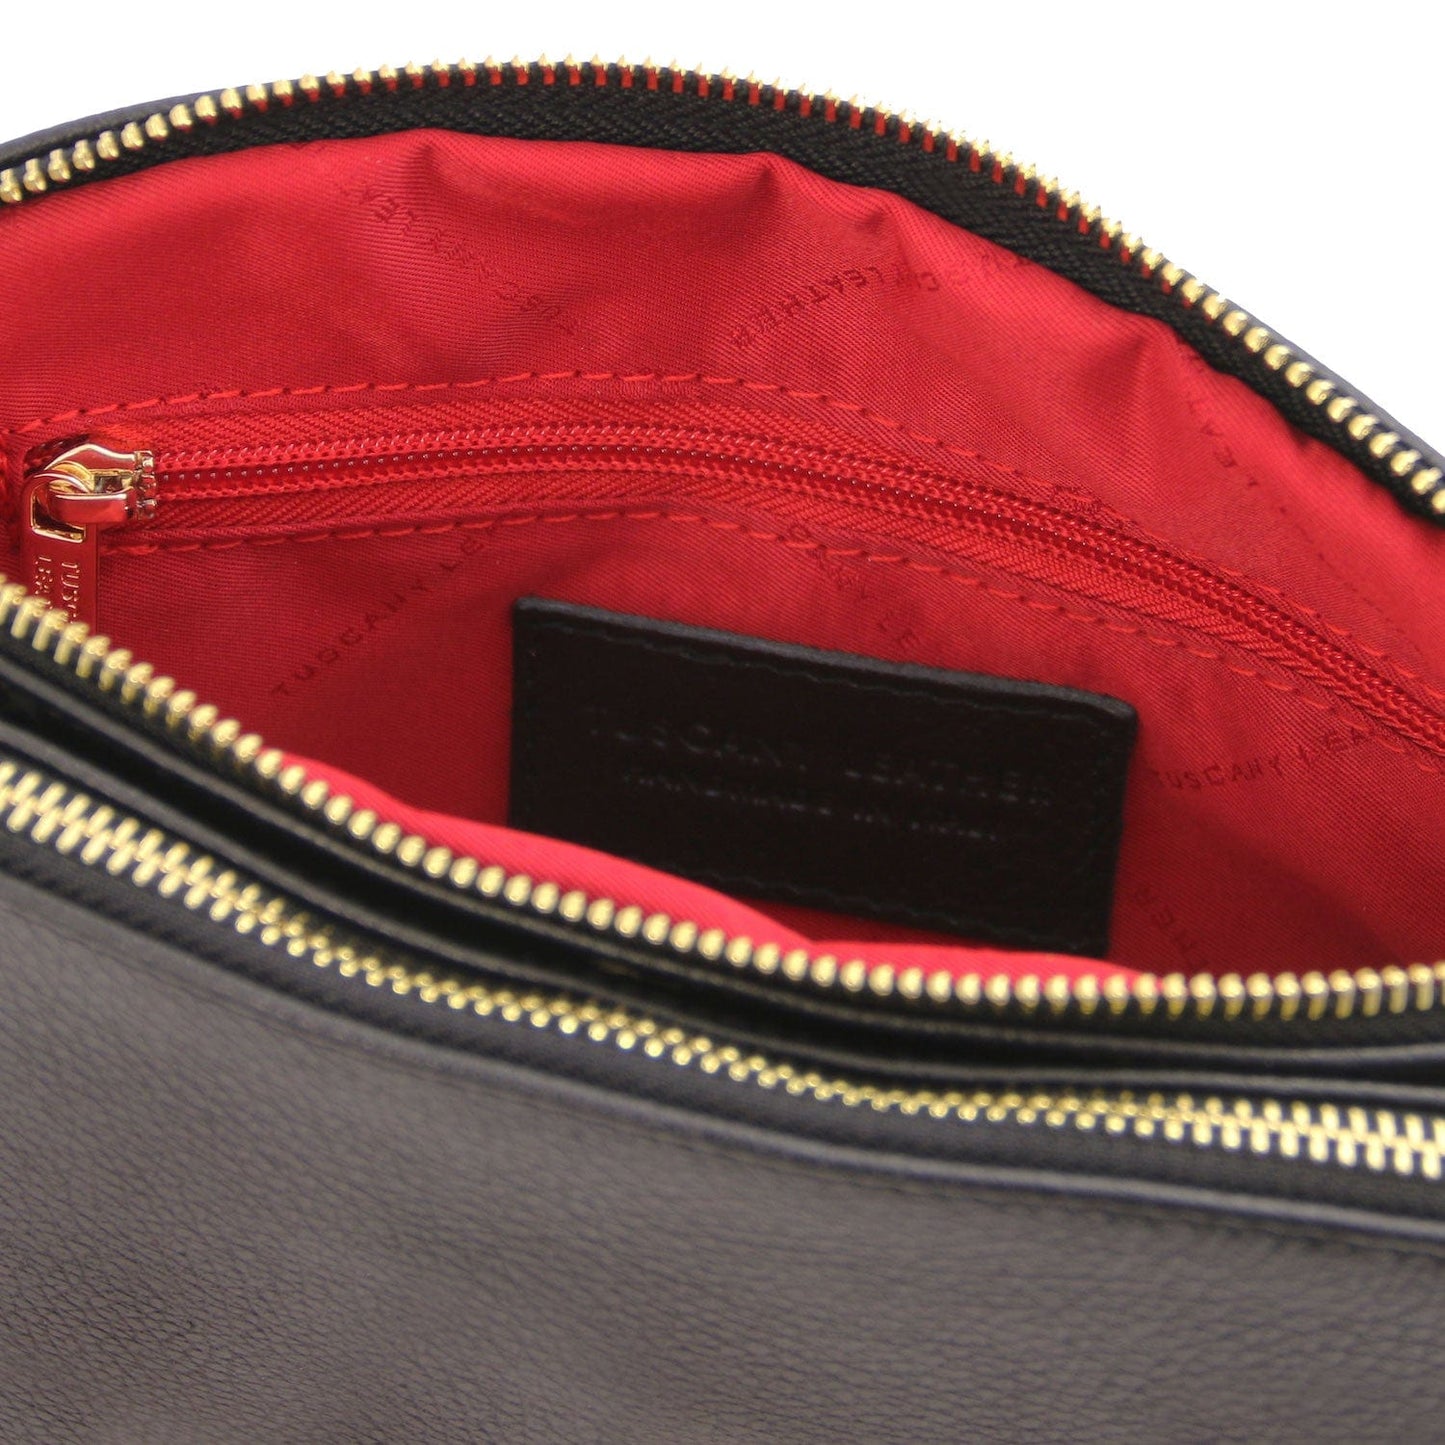 Lily - Soft leather shoulder bag | TL142375 - Premium Leather handbags - Shop now at San Rocco Italia